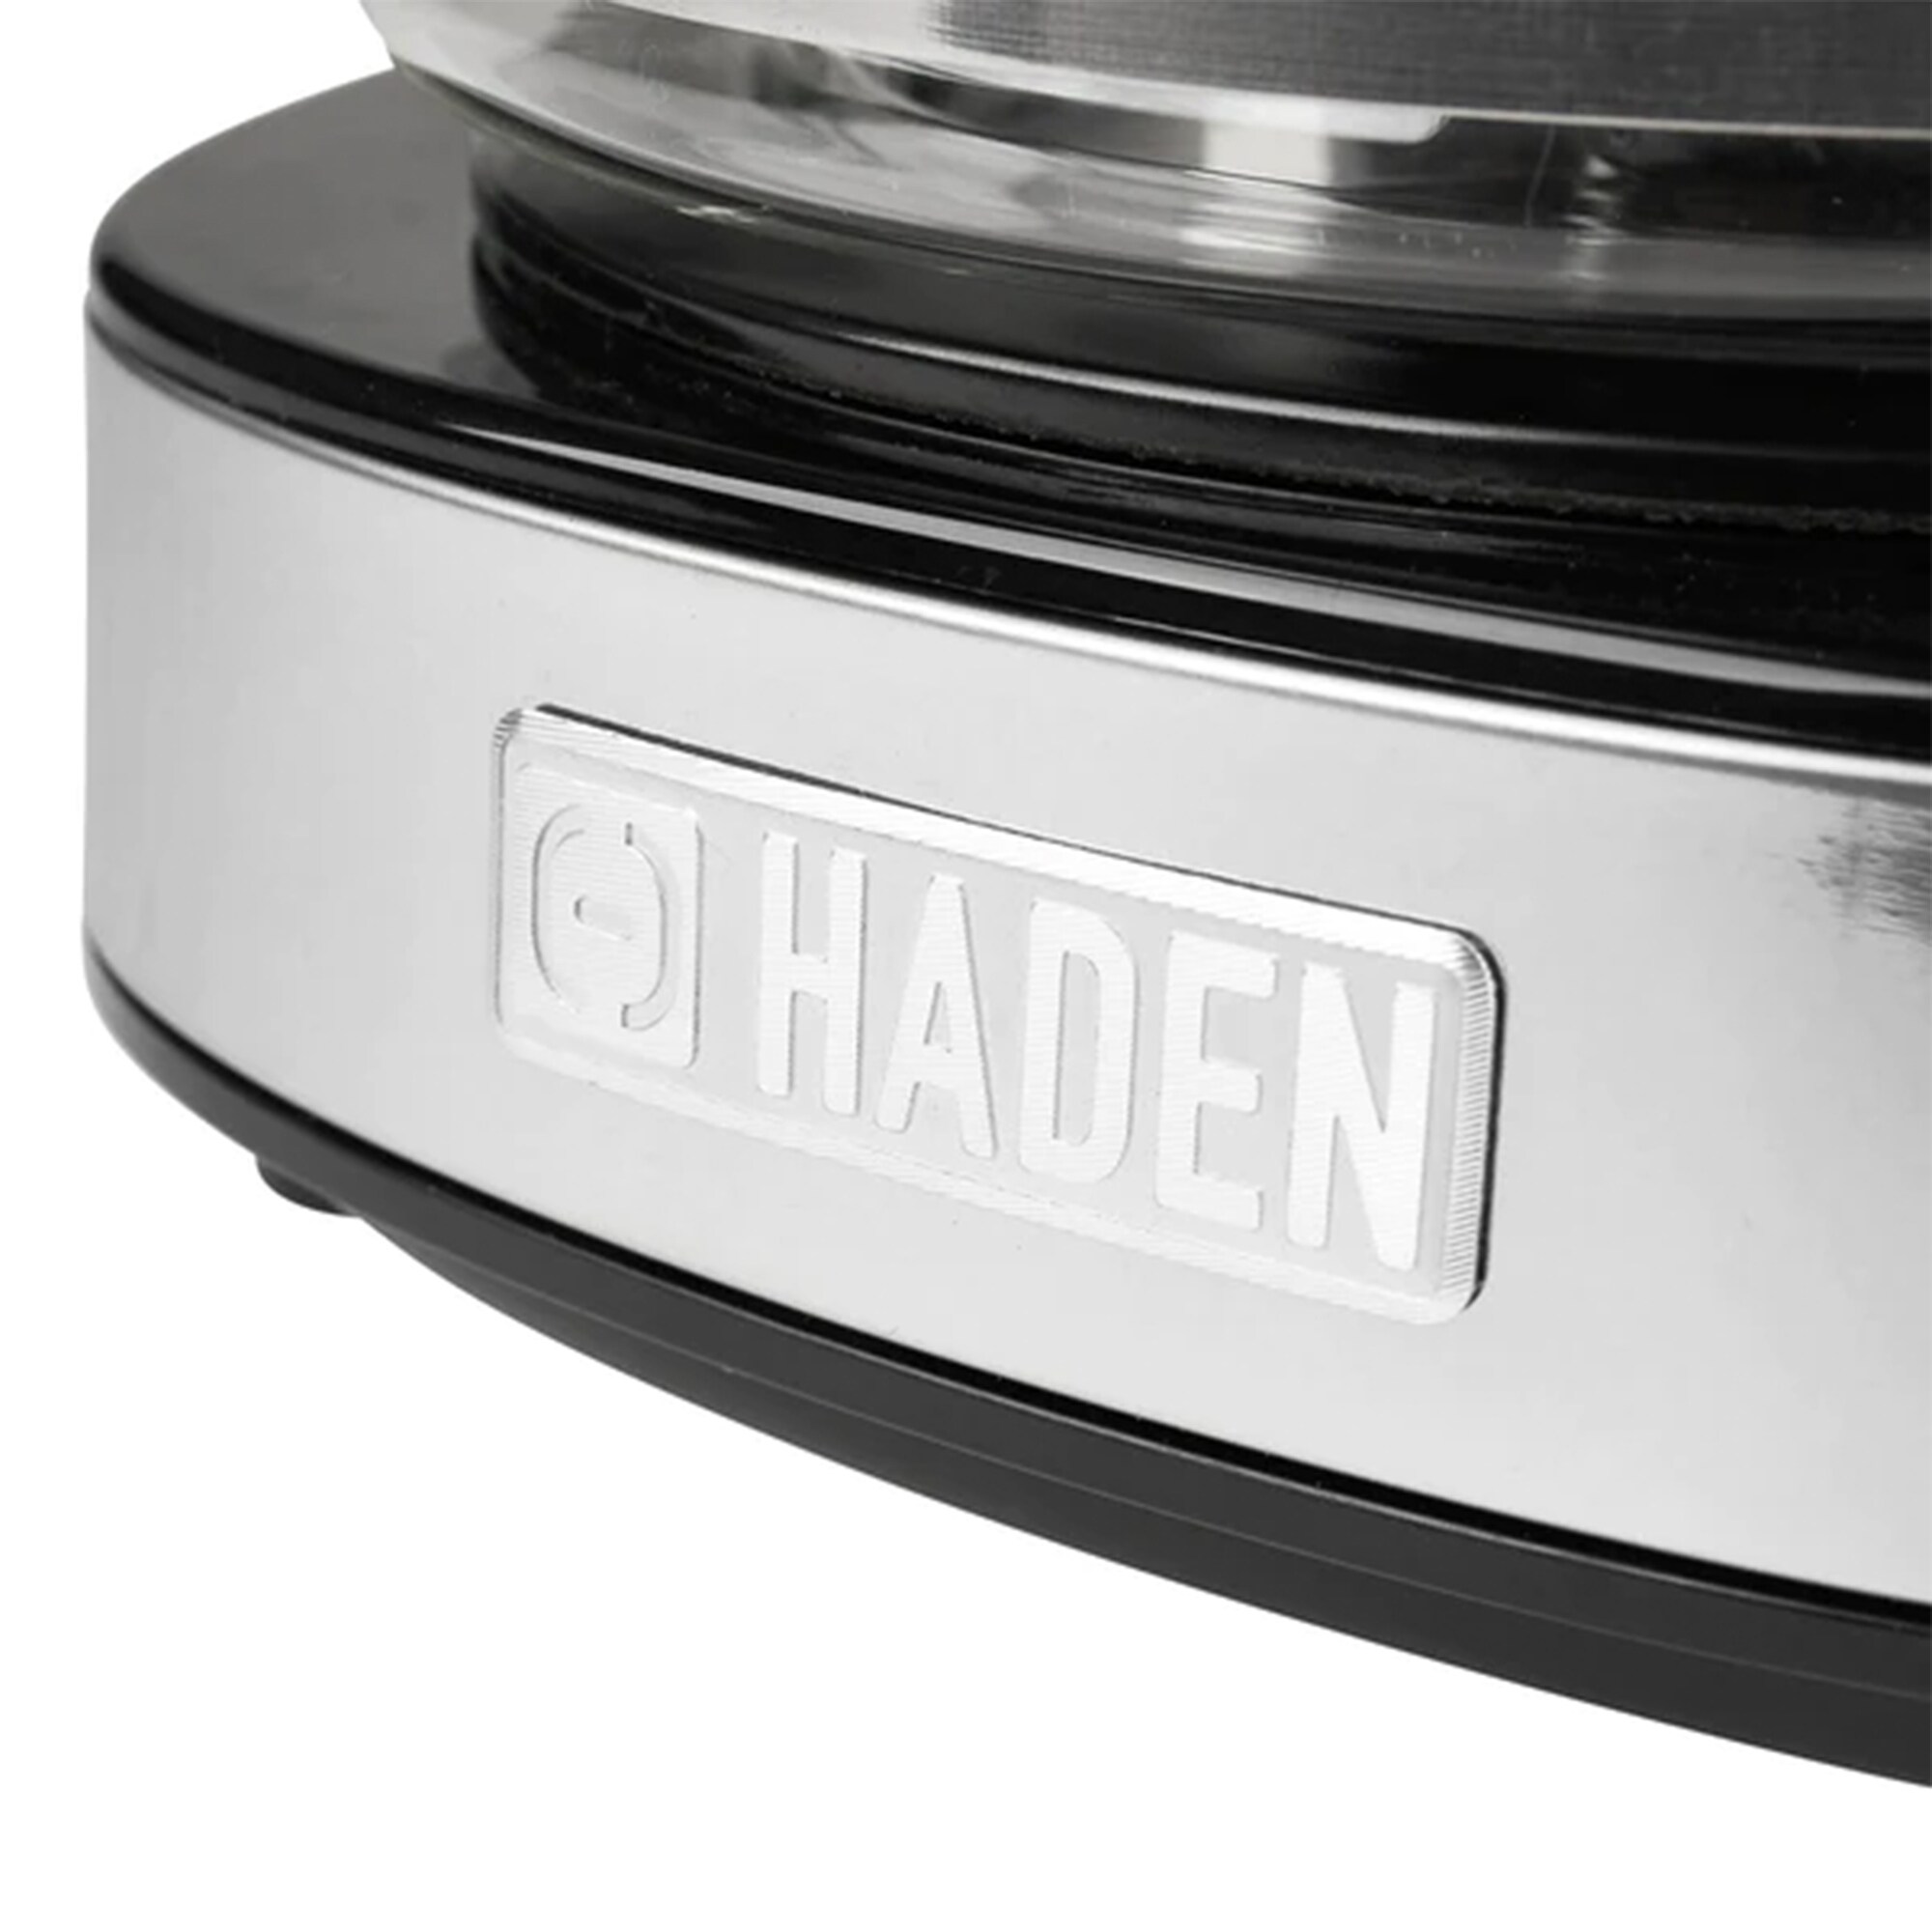 Haden Heritage 12-Cup Programmable Coffee Maker - Steel / Copper